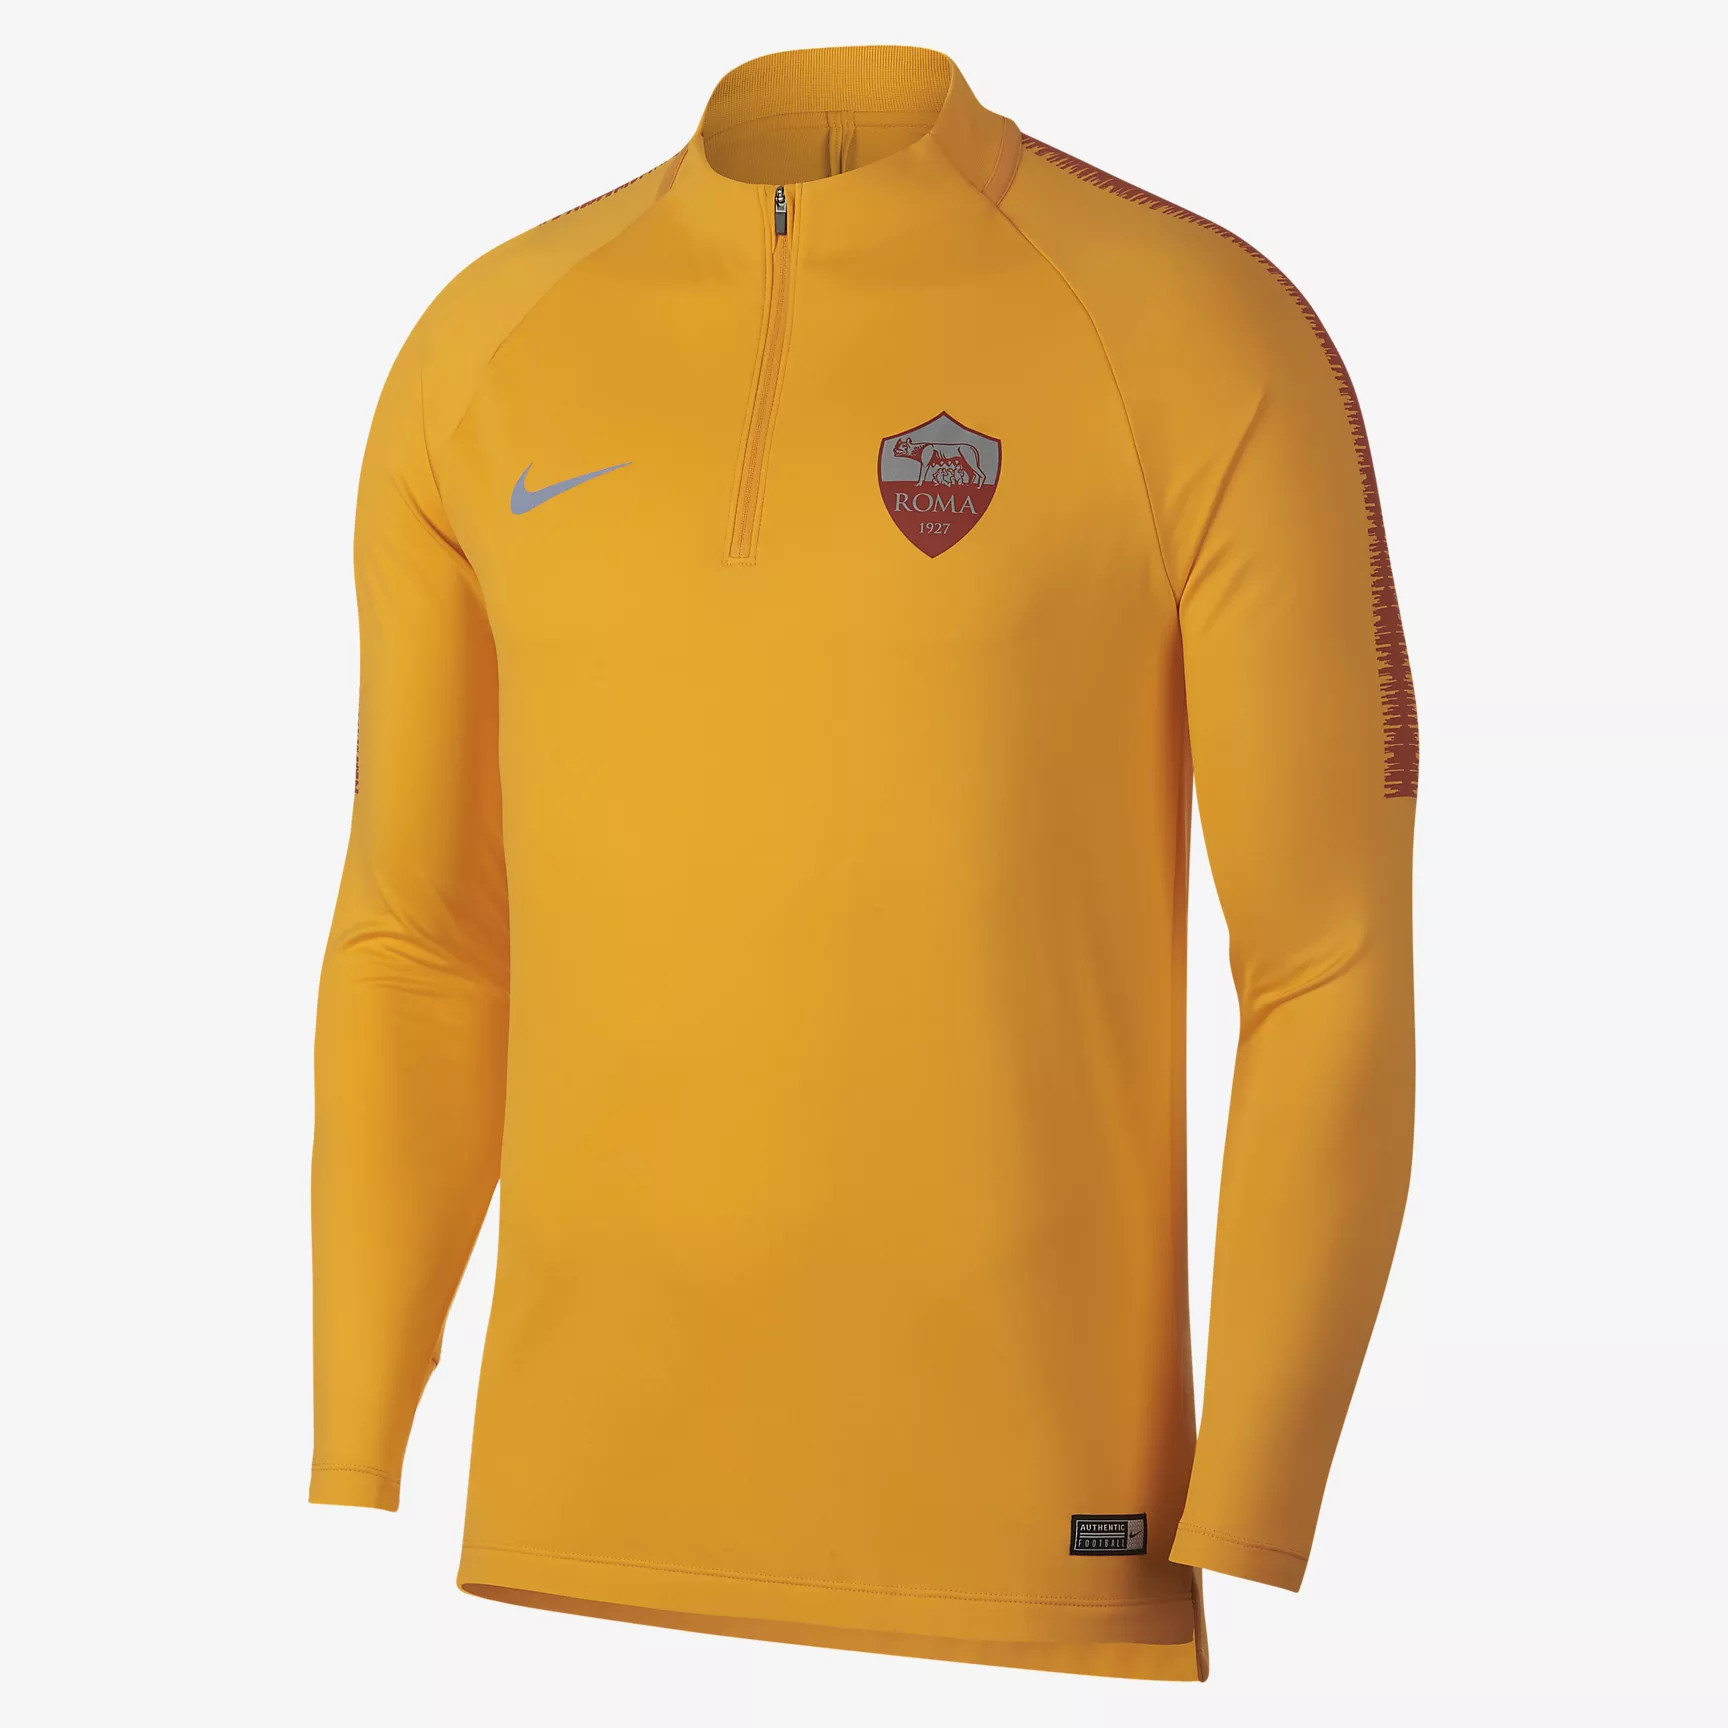 Groene achtergrond cel heb vertrouwen AS Roma draagt oker geel trainingspak in Champions League 2018-2019 -  Voetbalshirts.com